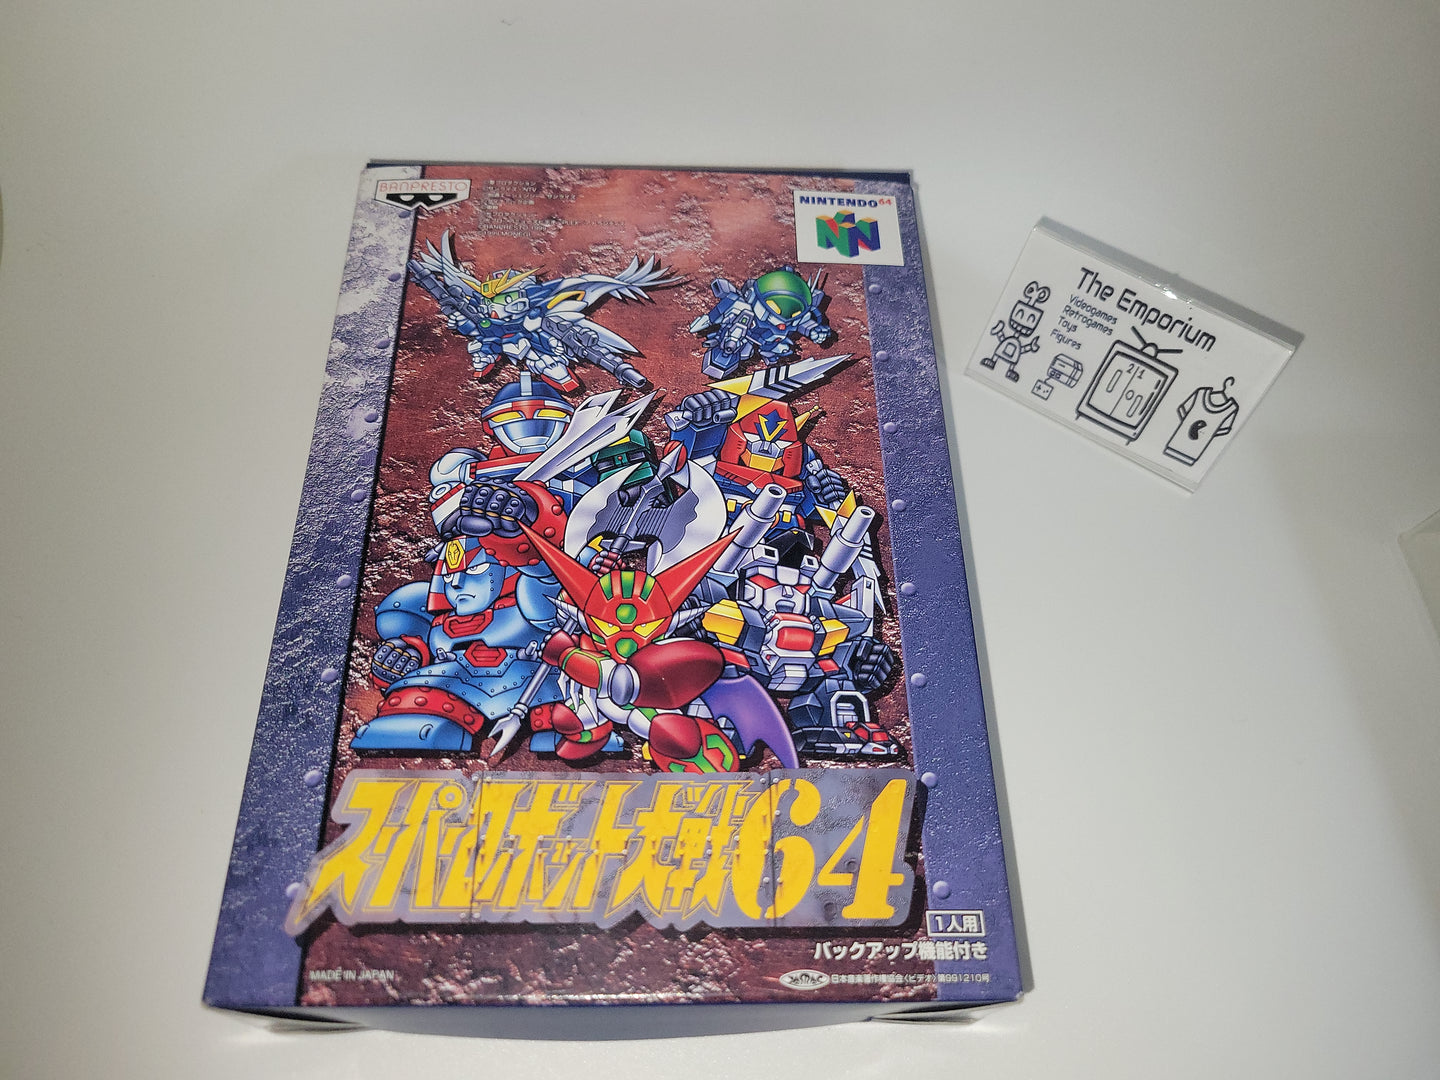 Super Robot Wars 64 / Super Robot Taisen 64 - Nintendo64 N64 Nintendo 64